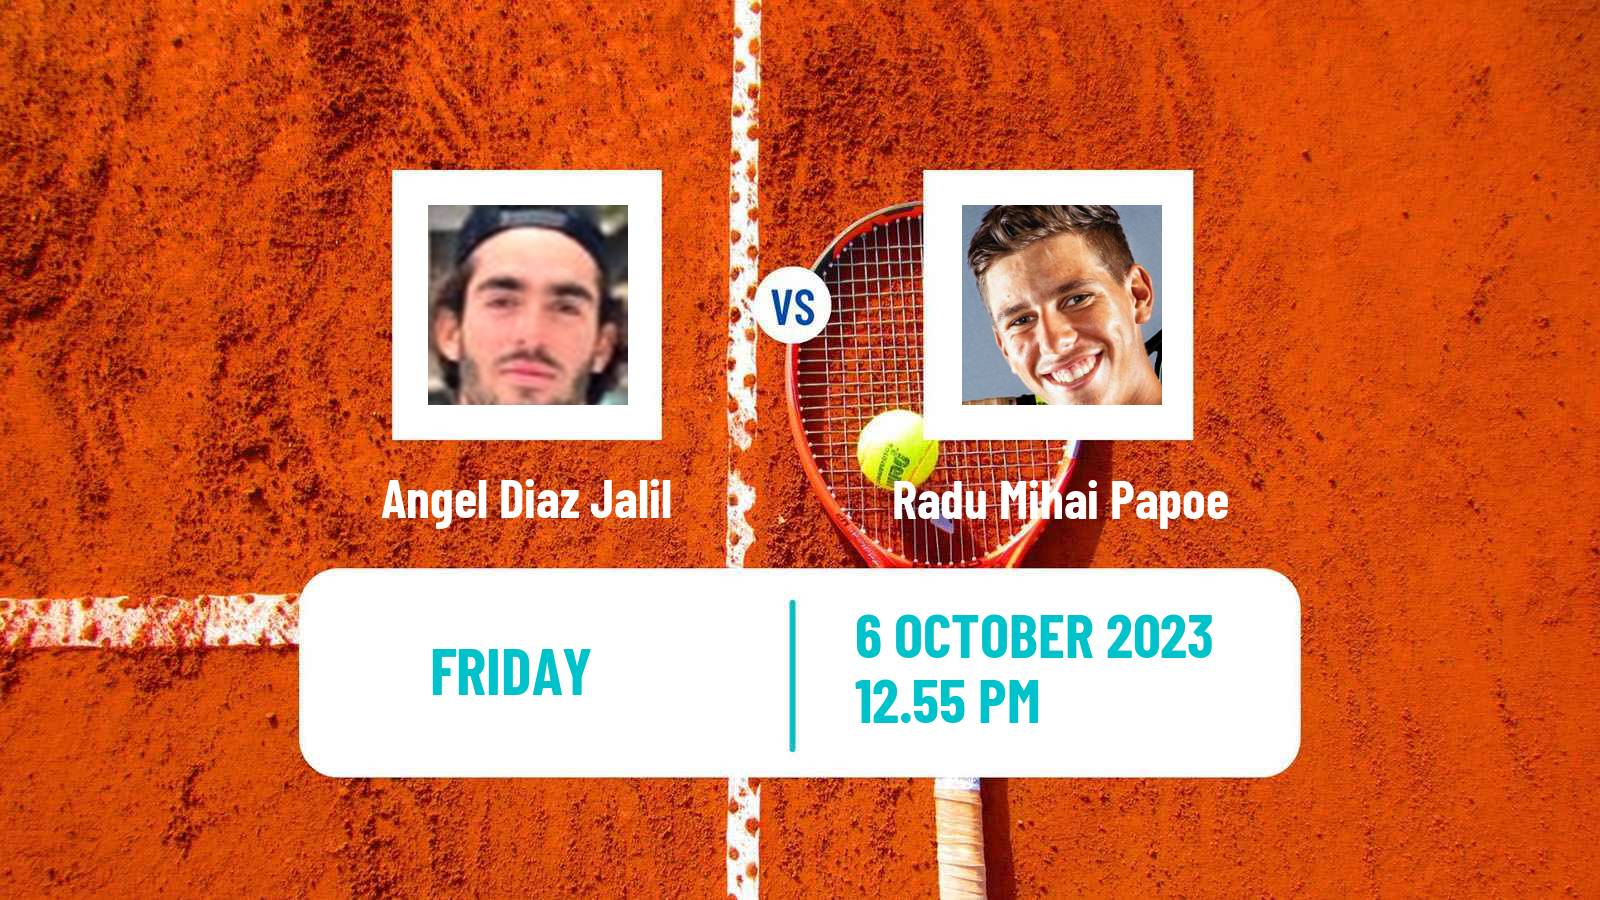 Tennis ITF M15 Ithaca Ny 2 Men Angel Diaz Jalil - Radu Mihai Papoe